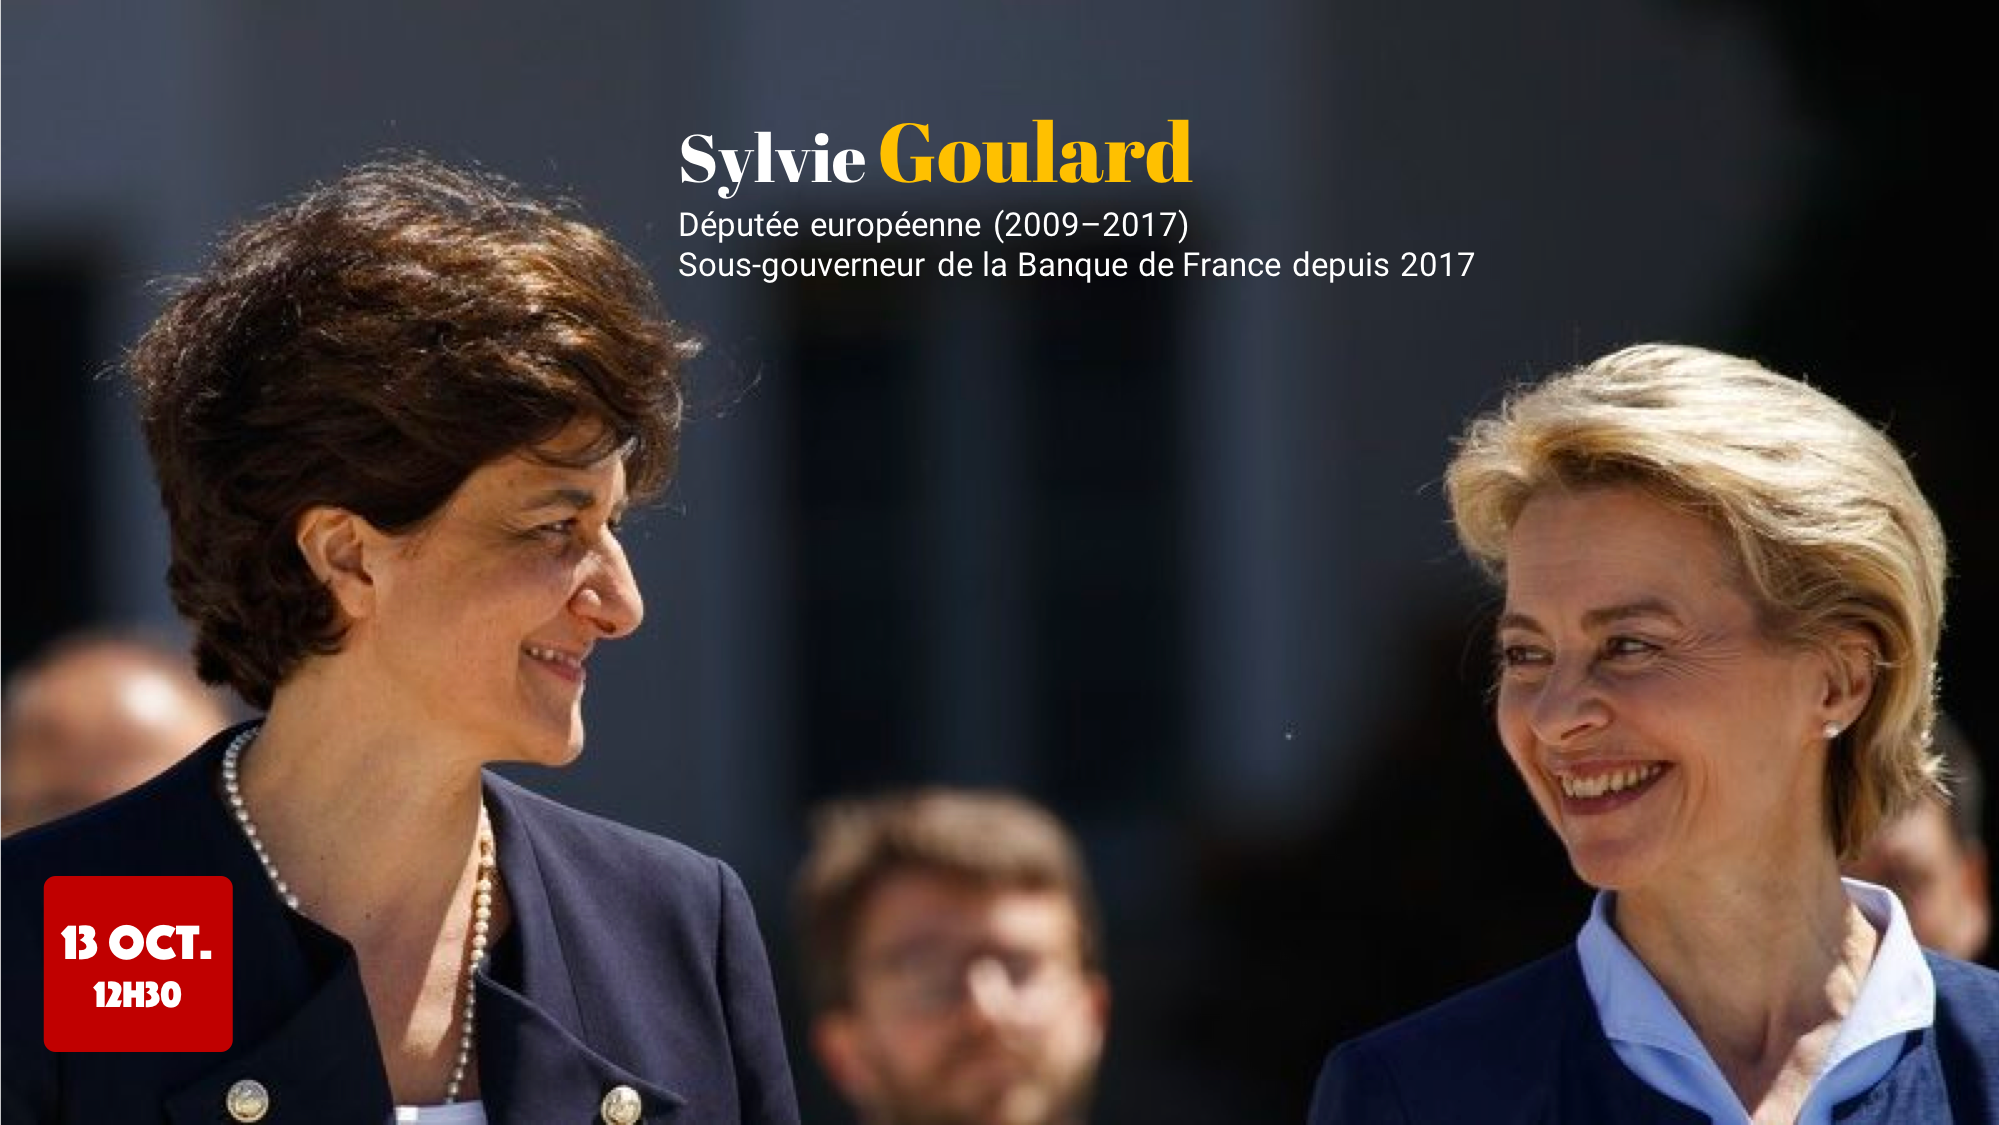 Conférence européenne / Sylvie Goulard, 13 oct. – 12h30